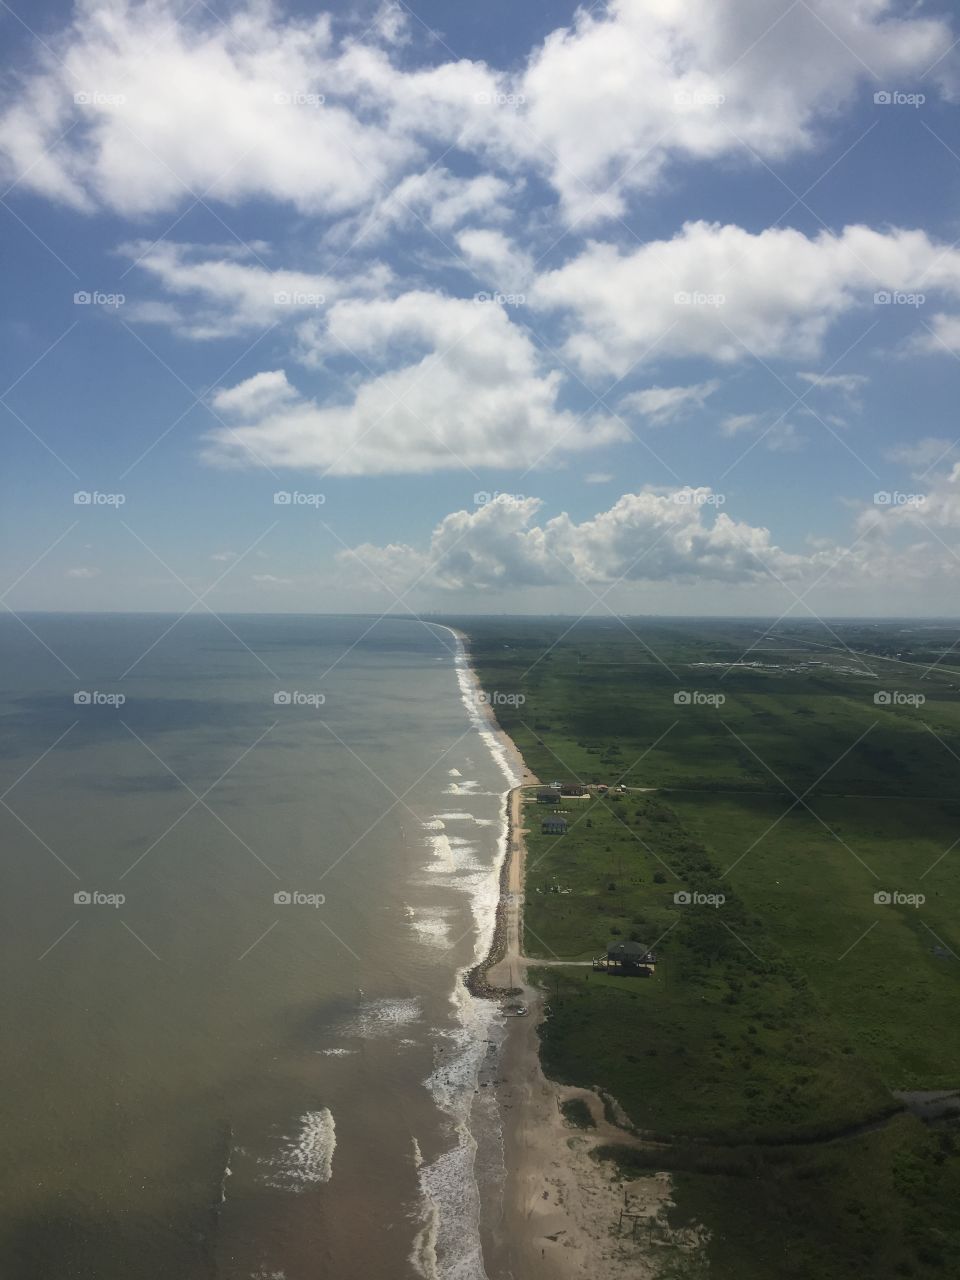 Louisiana's coast from a helicopter 